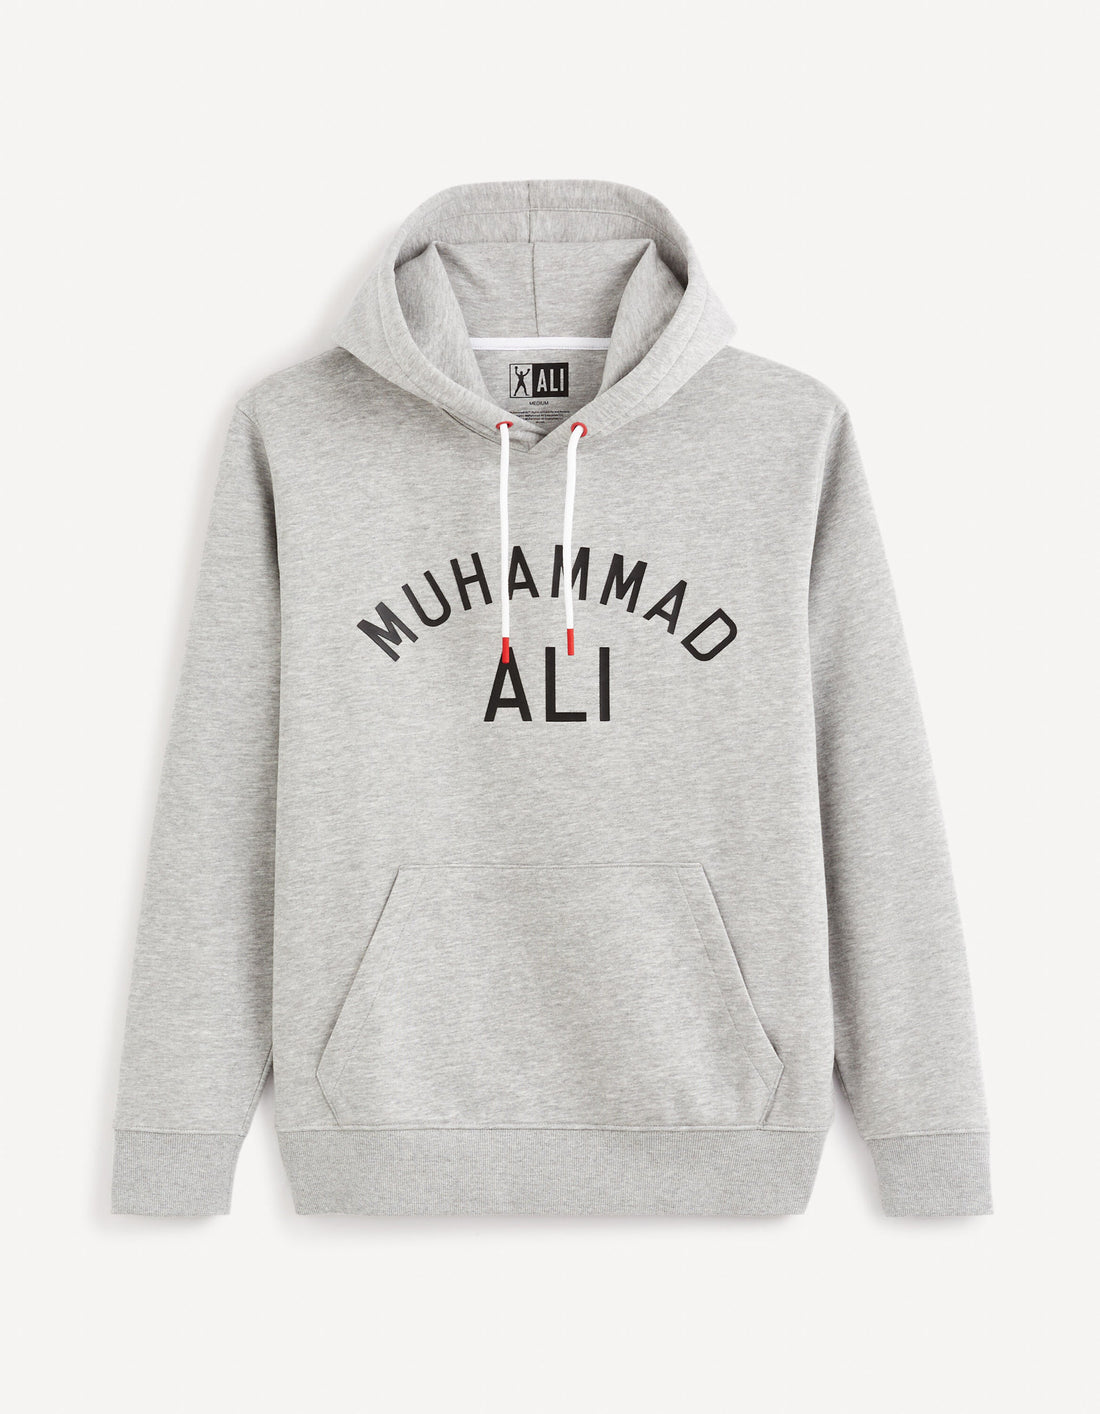 Muhammad Ali - Sweatshirt_LDEALISW_HEATHER GREY_01